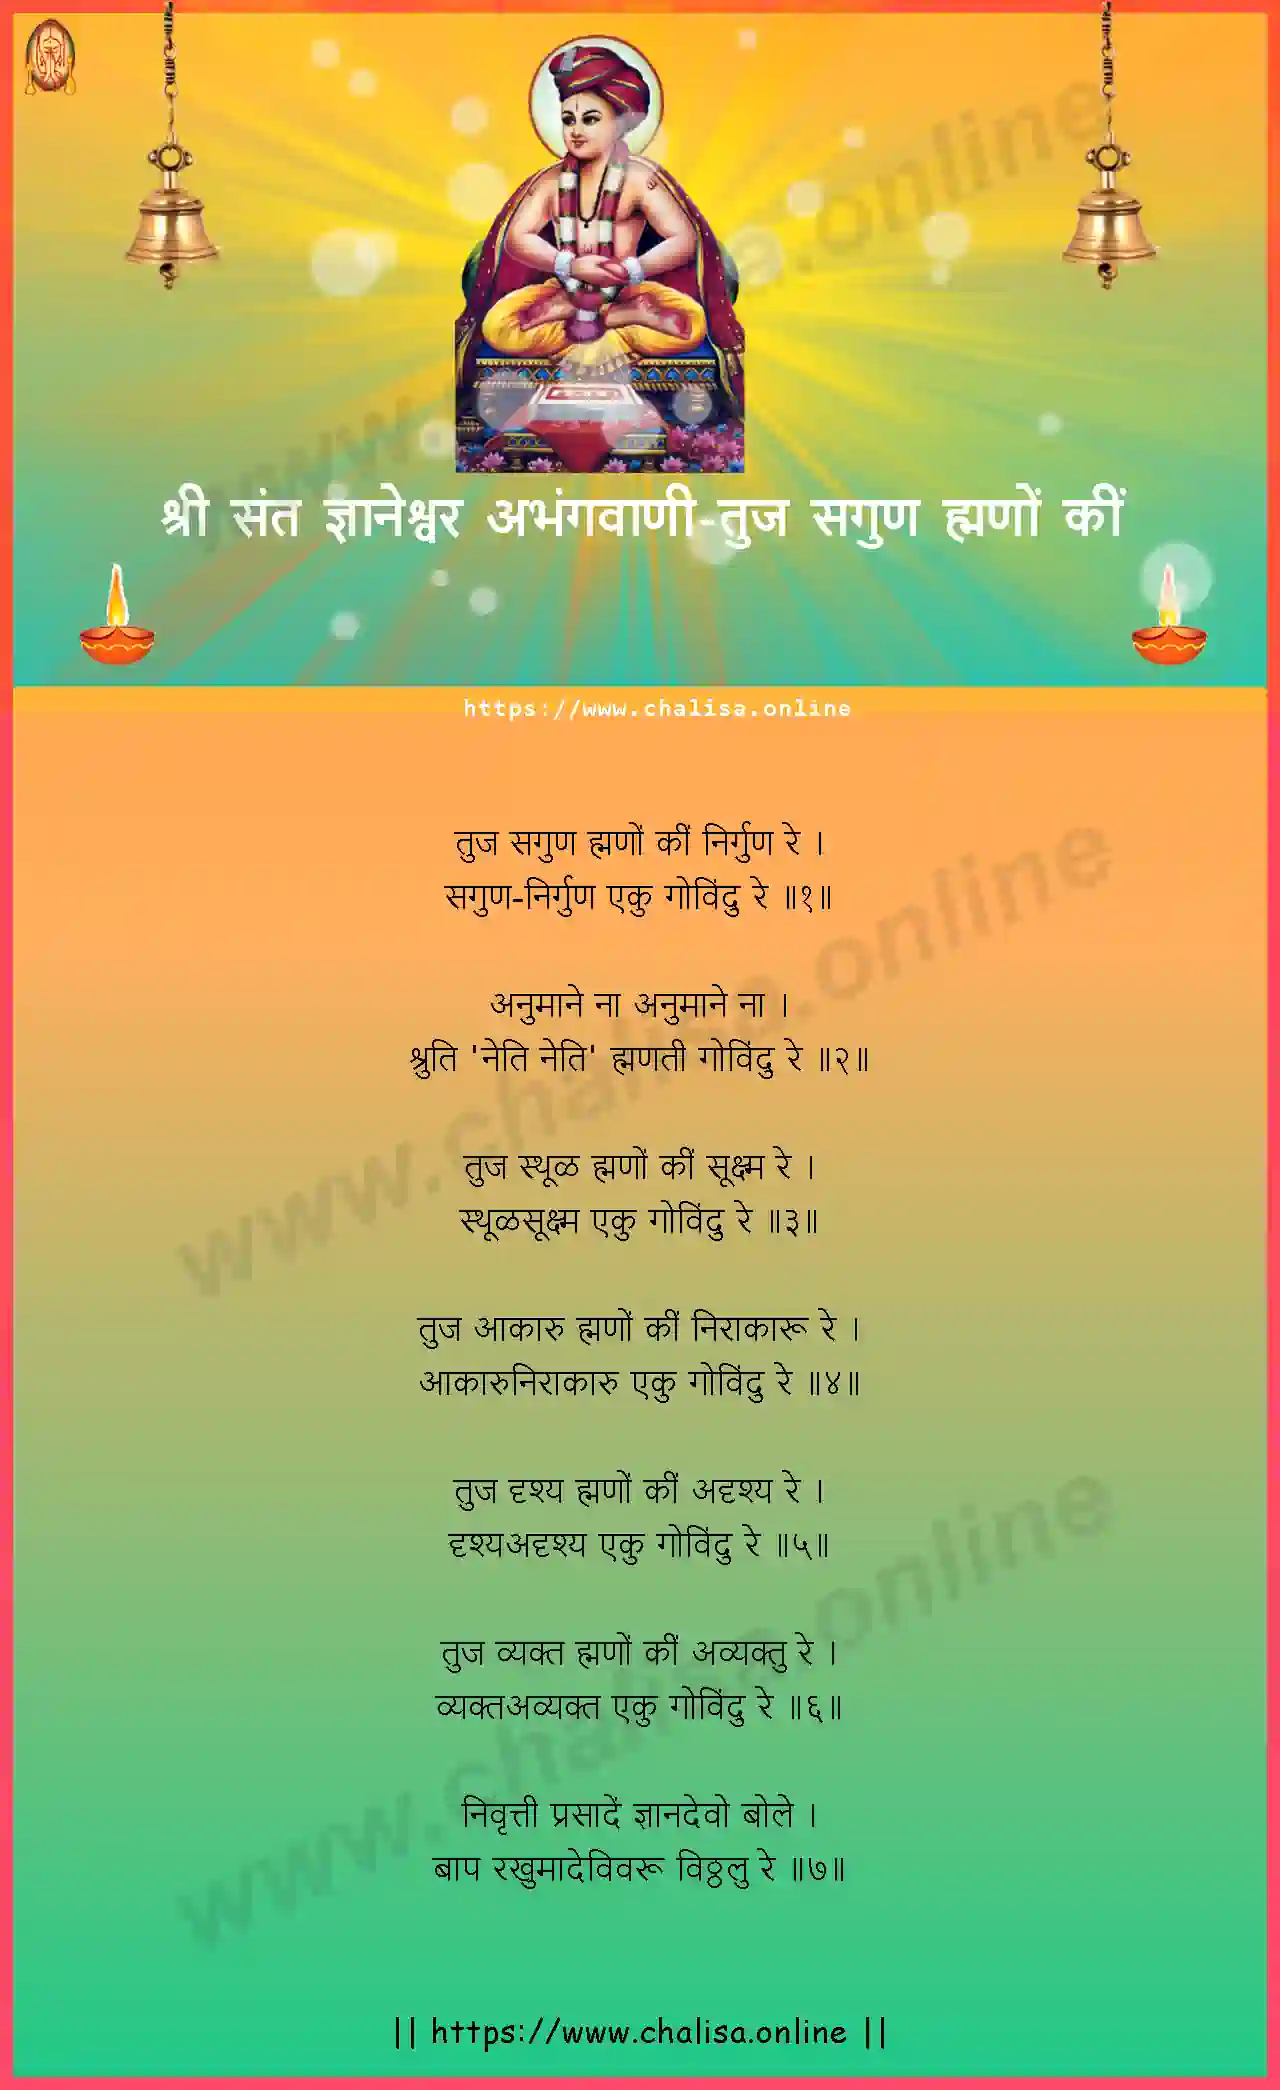 tuj-sagun-mhano-ki-shri-sant-dnyaneshwar-abhang-marathi-lyrics-download